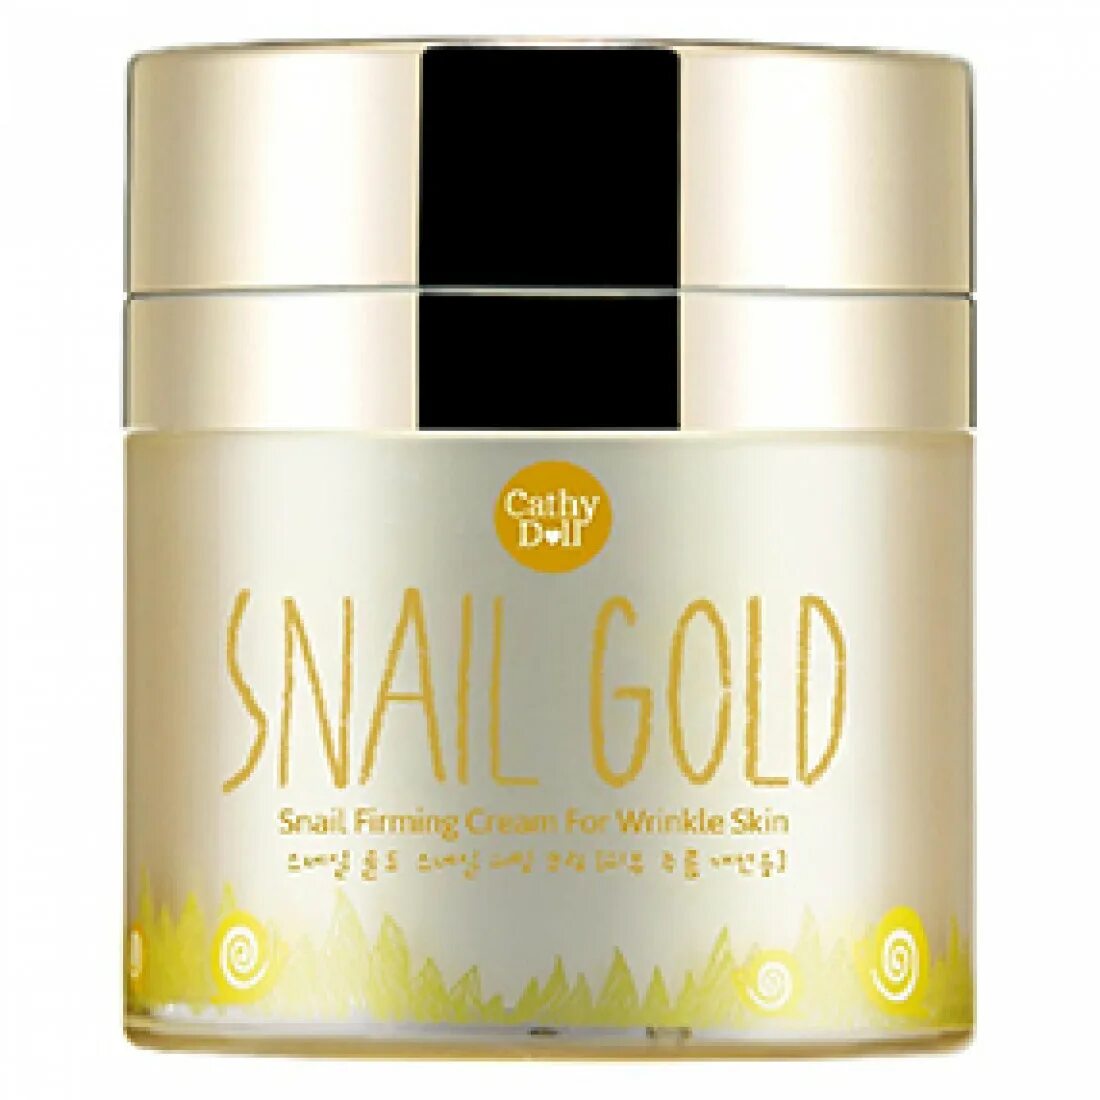 Крем Cathy Doll Snail Gold. Cathy Doll Snail Gold Snail Firming Cream for Wrinkle Skin. Snail Gold крем Тайланд Cathy Doll. Крем для лица с золотом Cathy Doll. Золото улитка крем